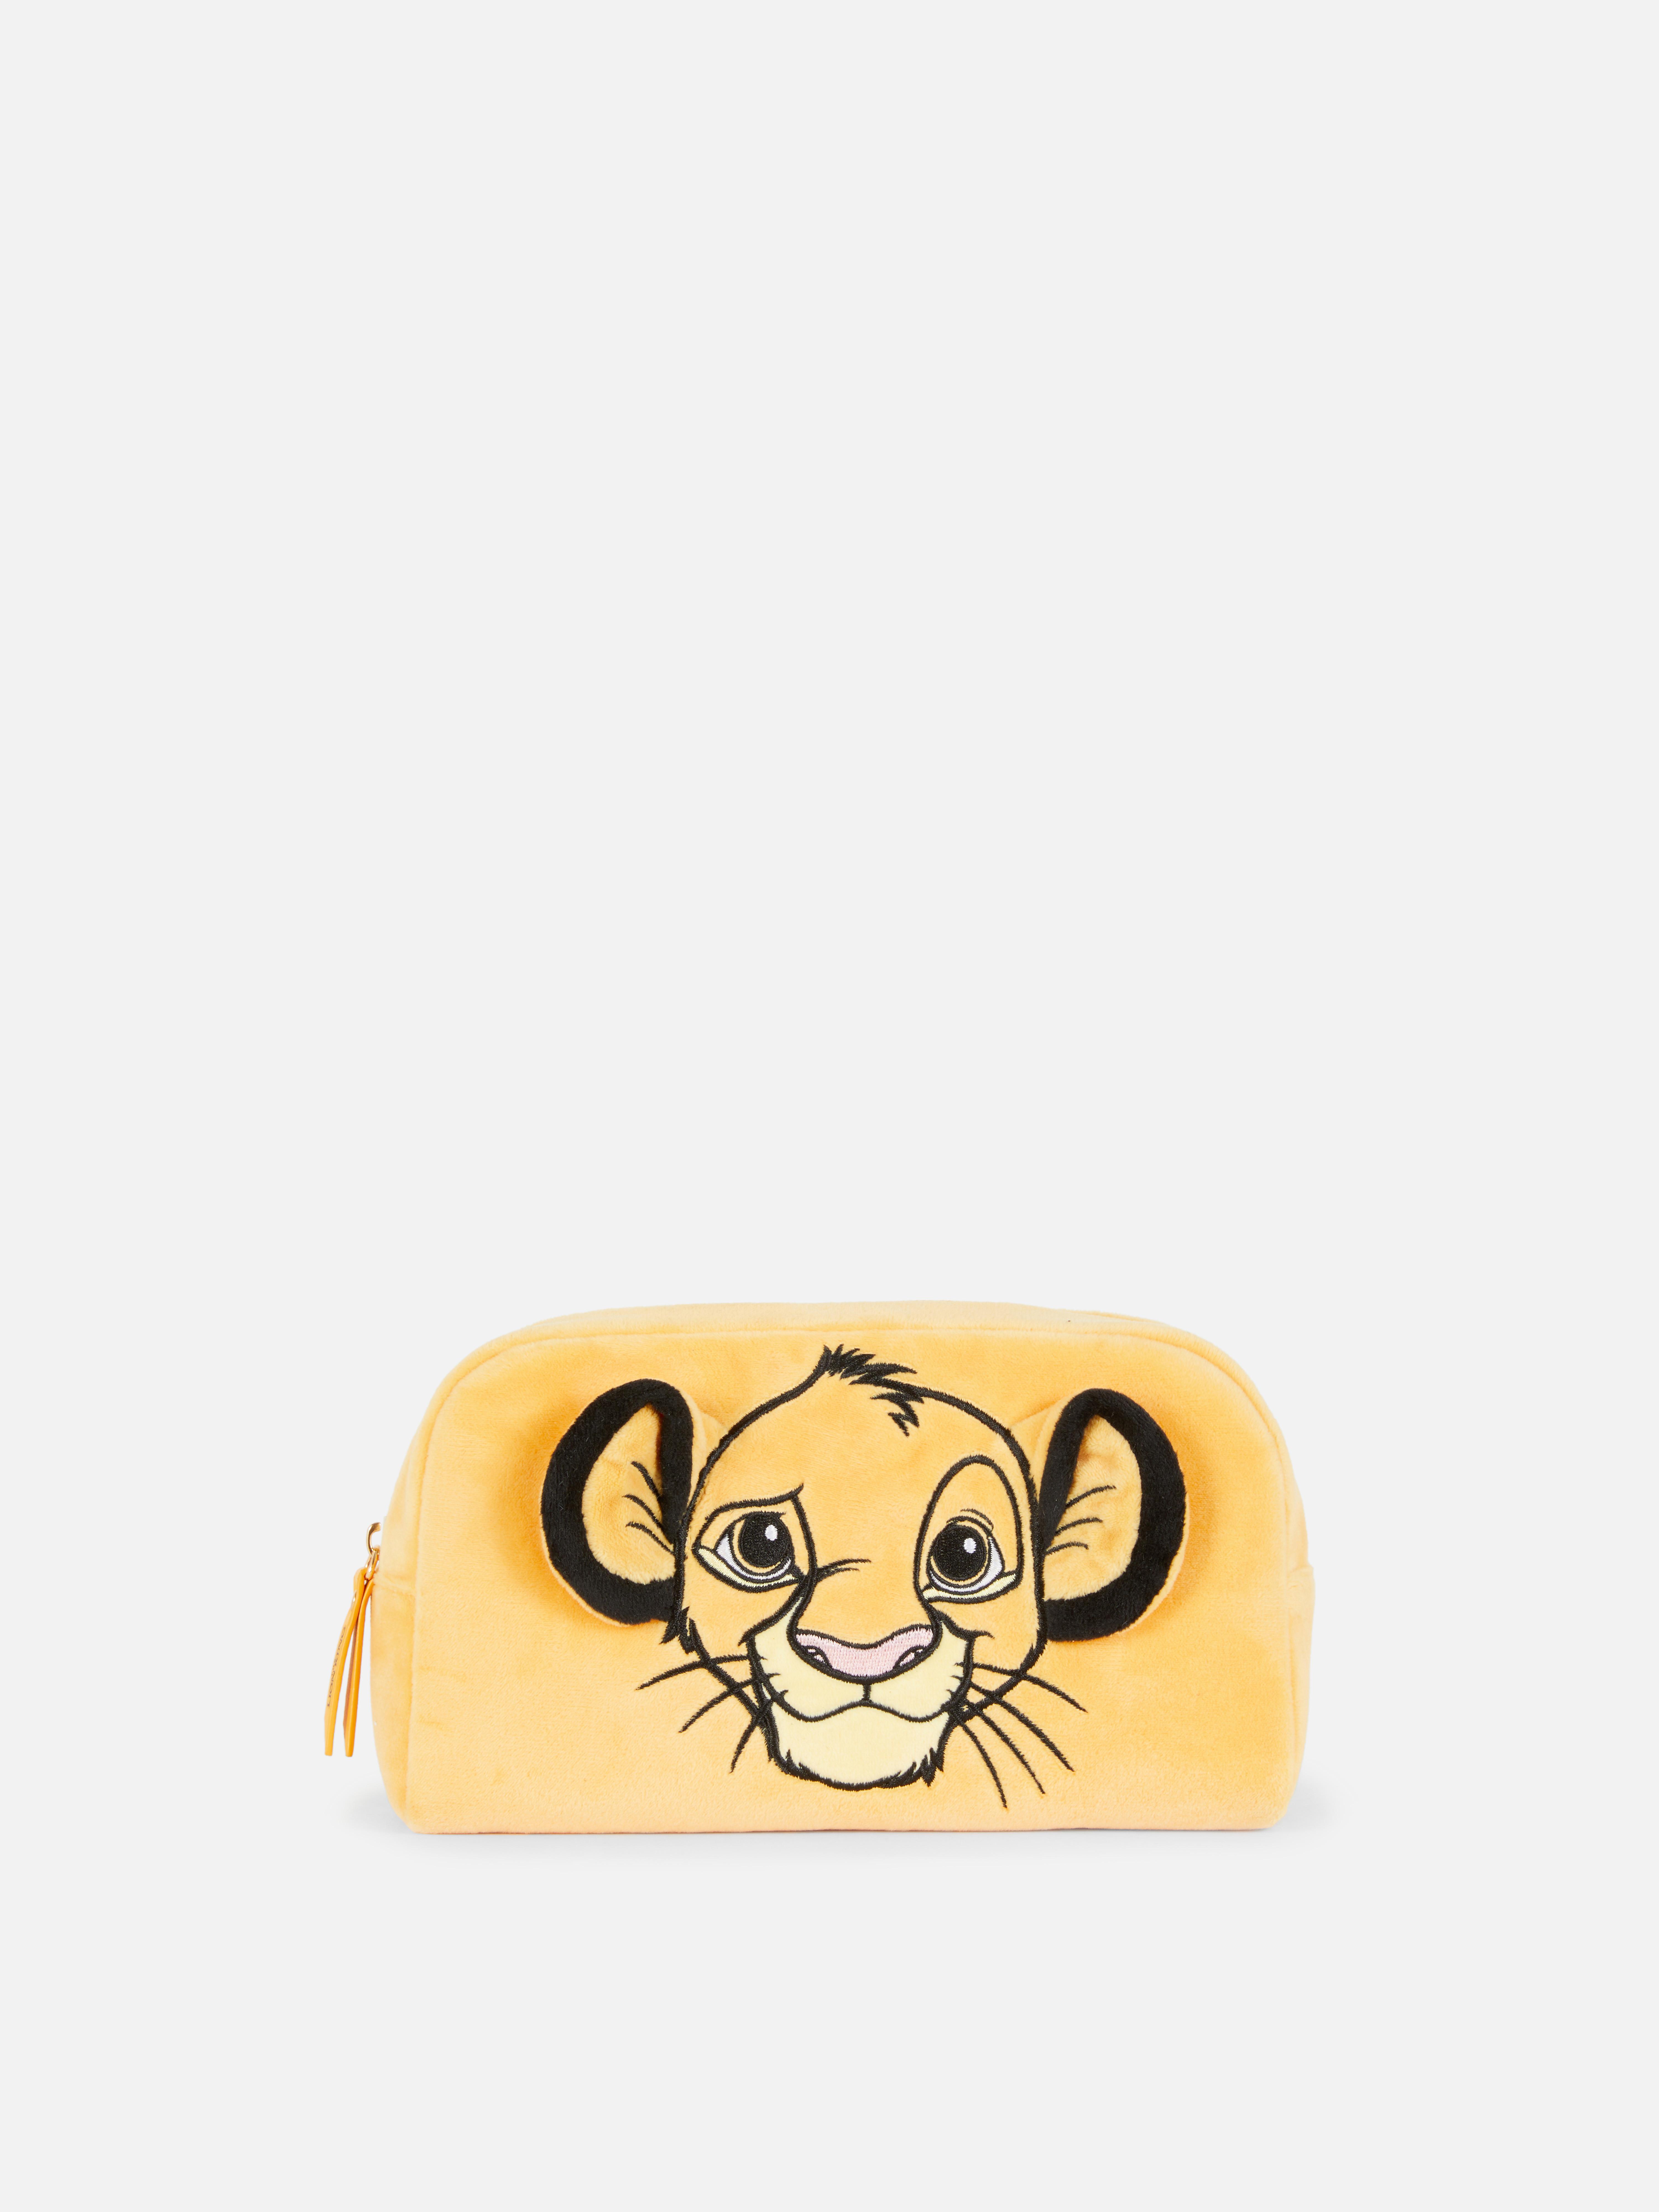 Disney’s The Lion King 3D Makeup Bag